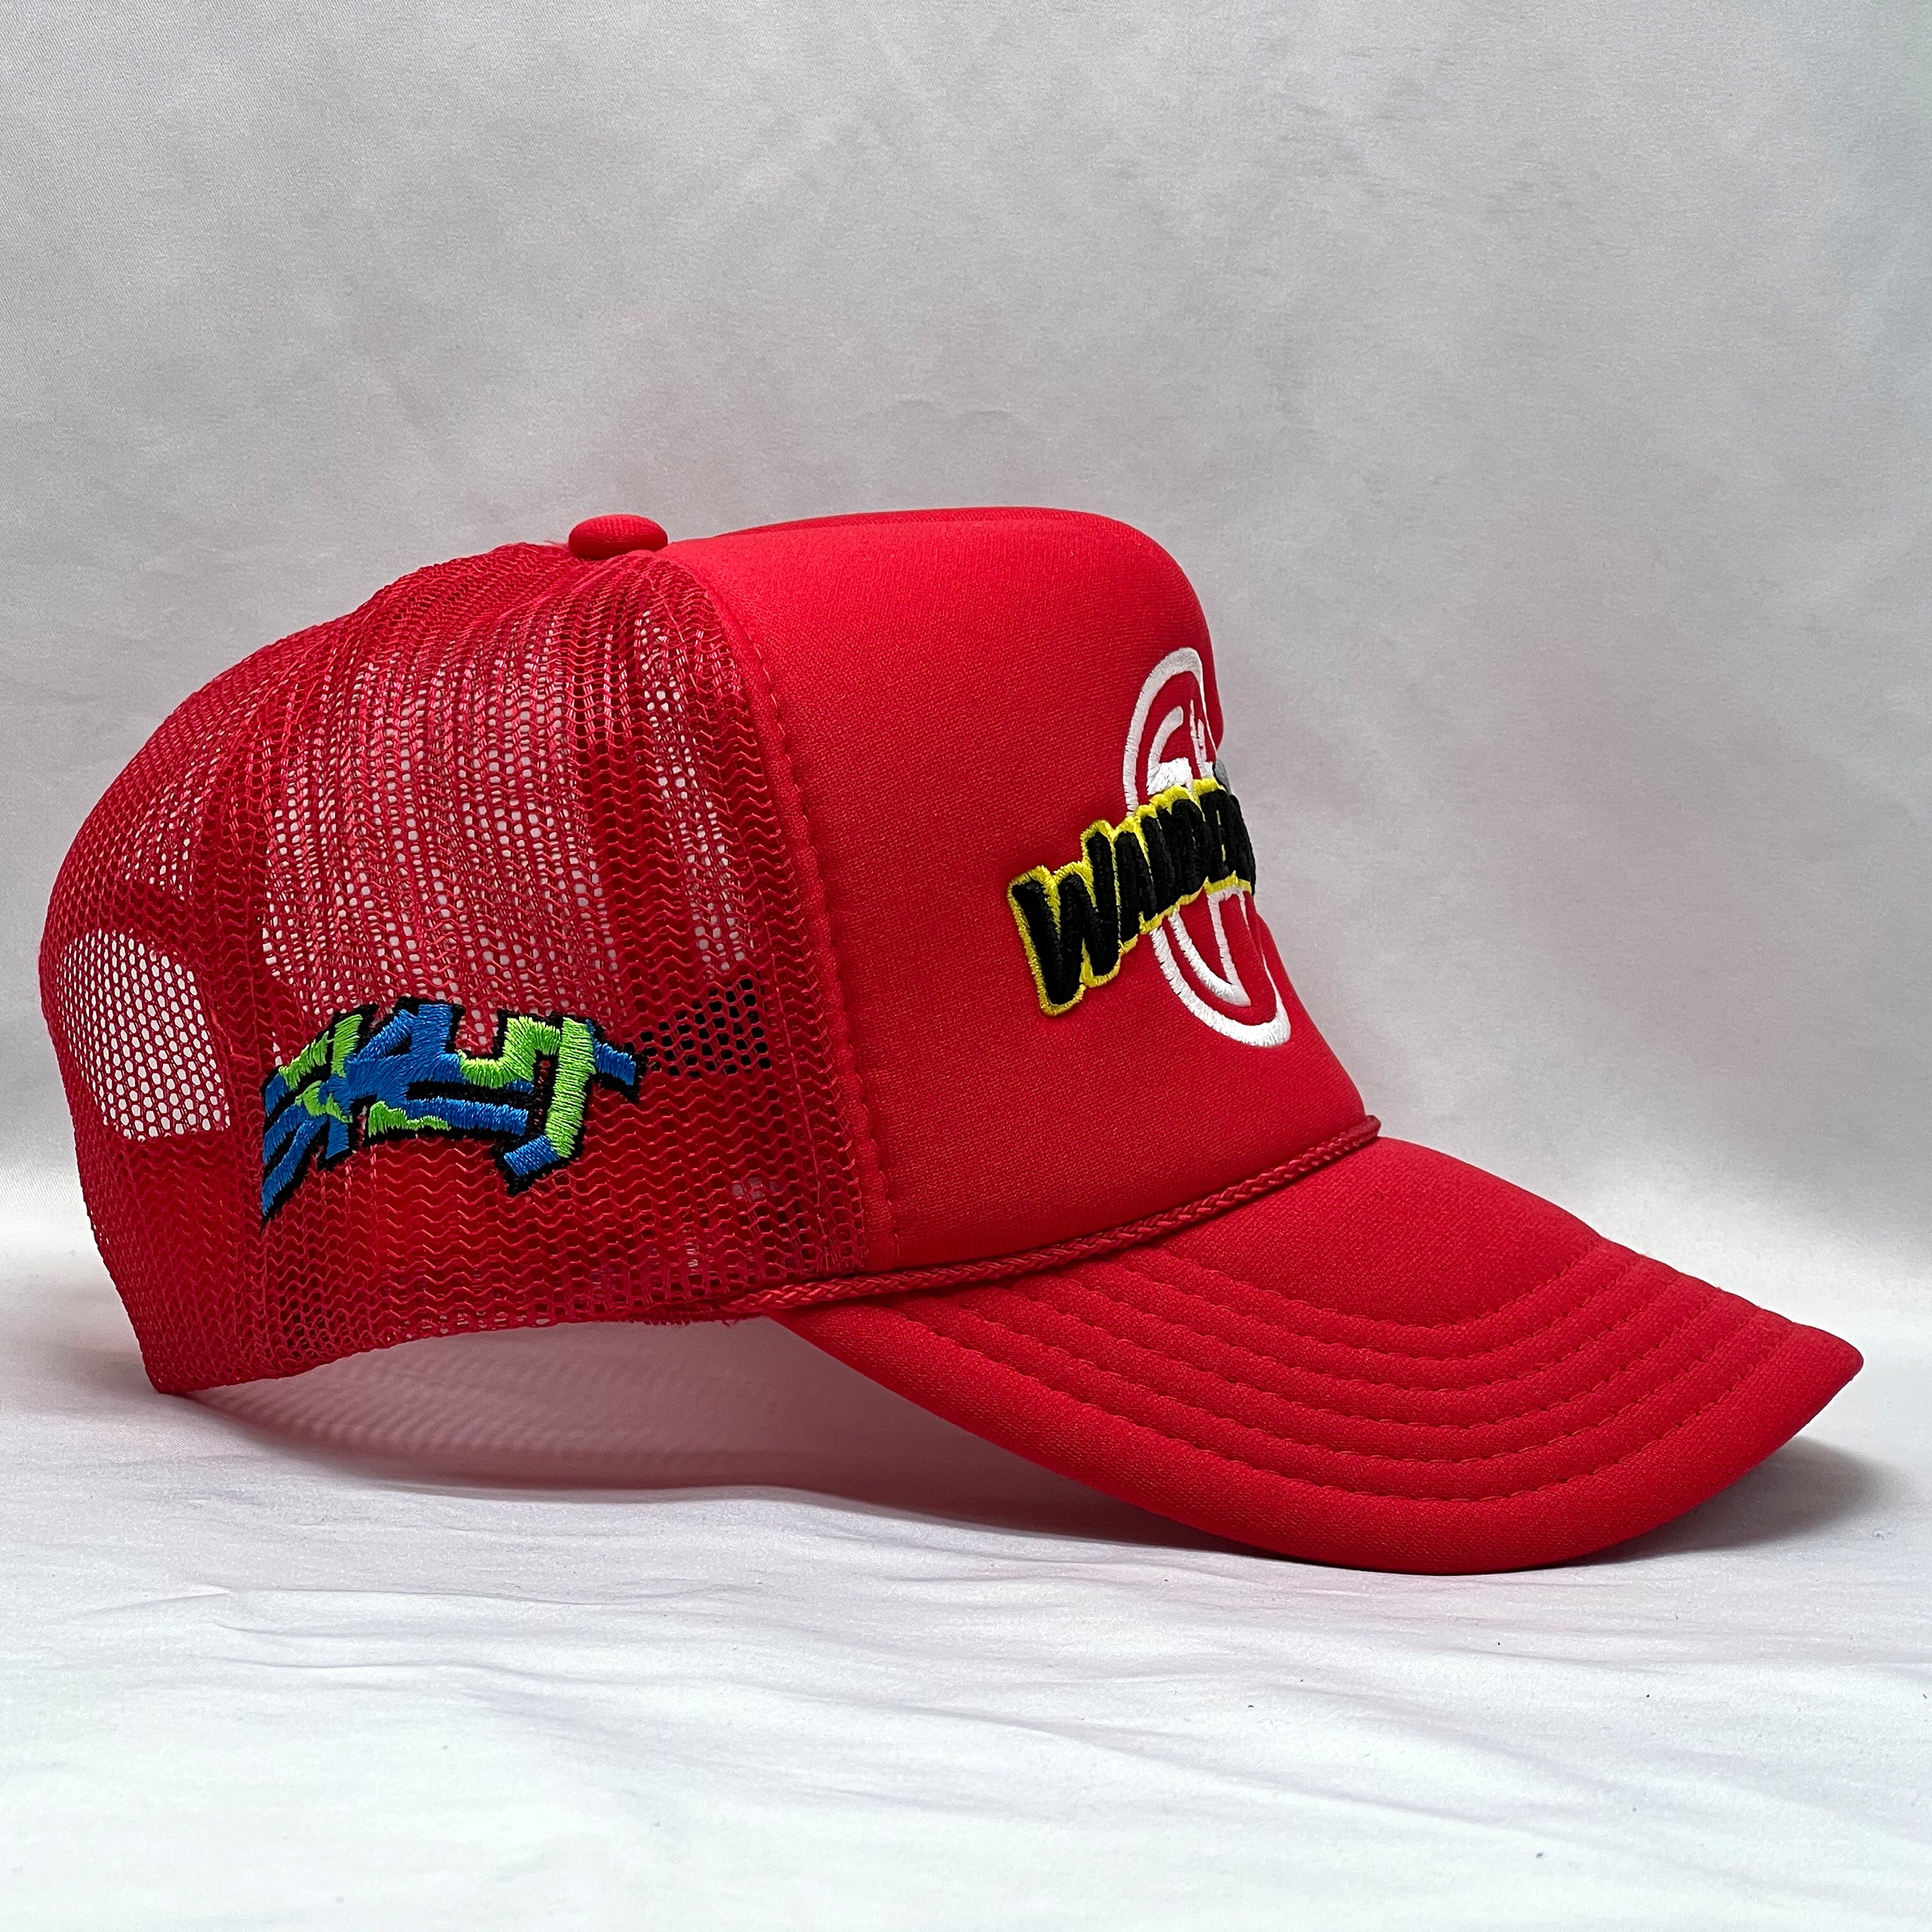 The WANDERLUST Trucker Hat (Red)